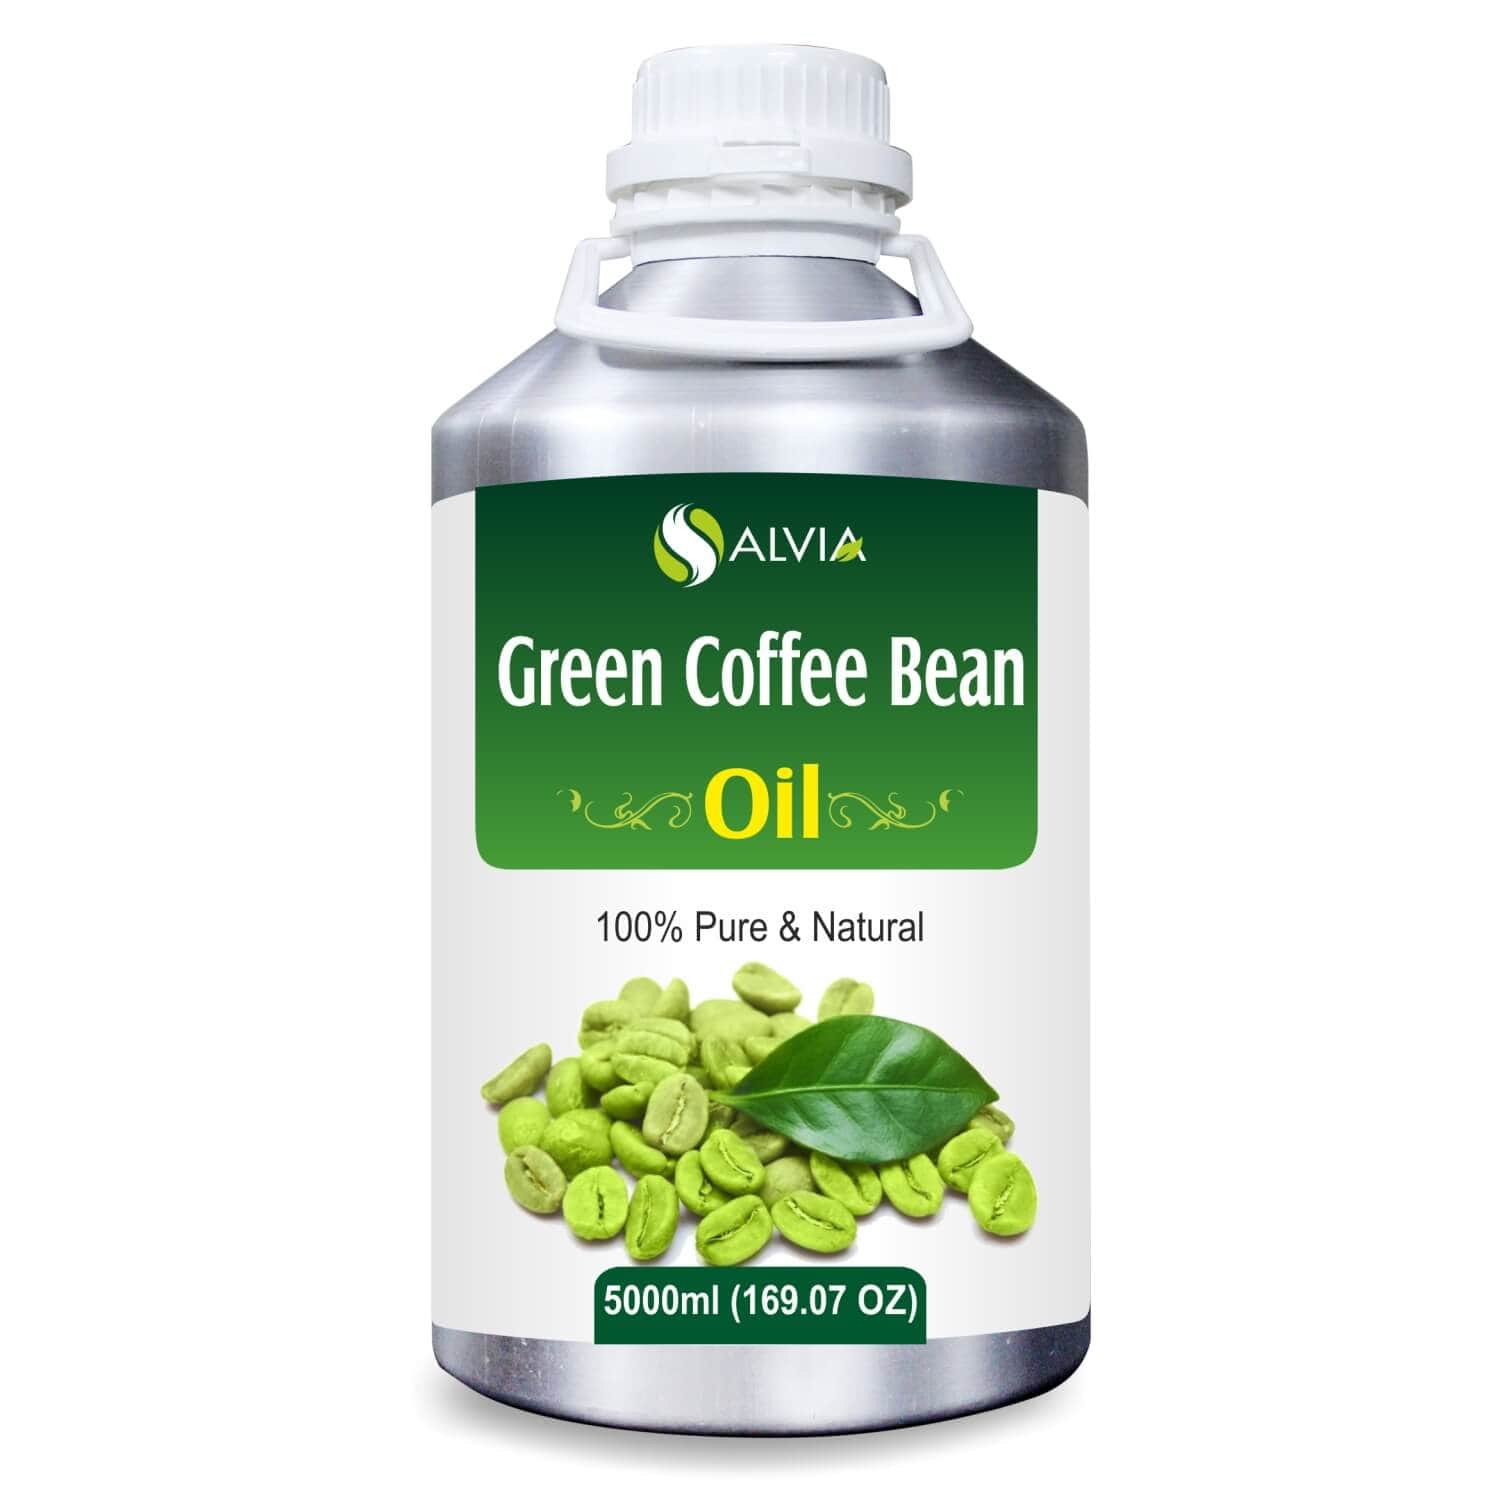 Salvia Natural Carrier Oils 5000ml Green Coffee Bean Oil (Coffea Arabica) 100% Natural Pure Carrier Oil